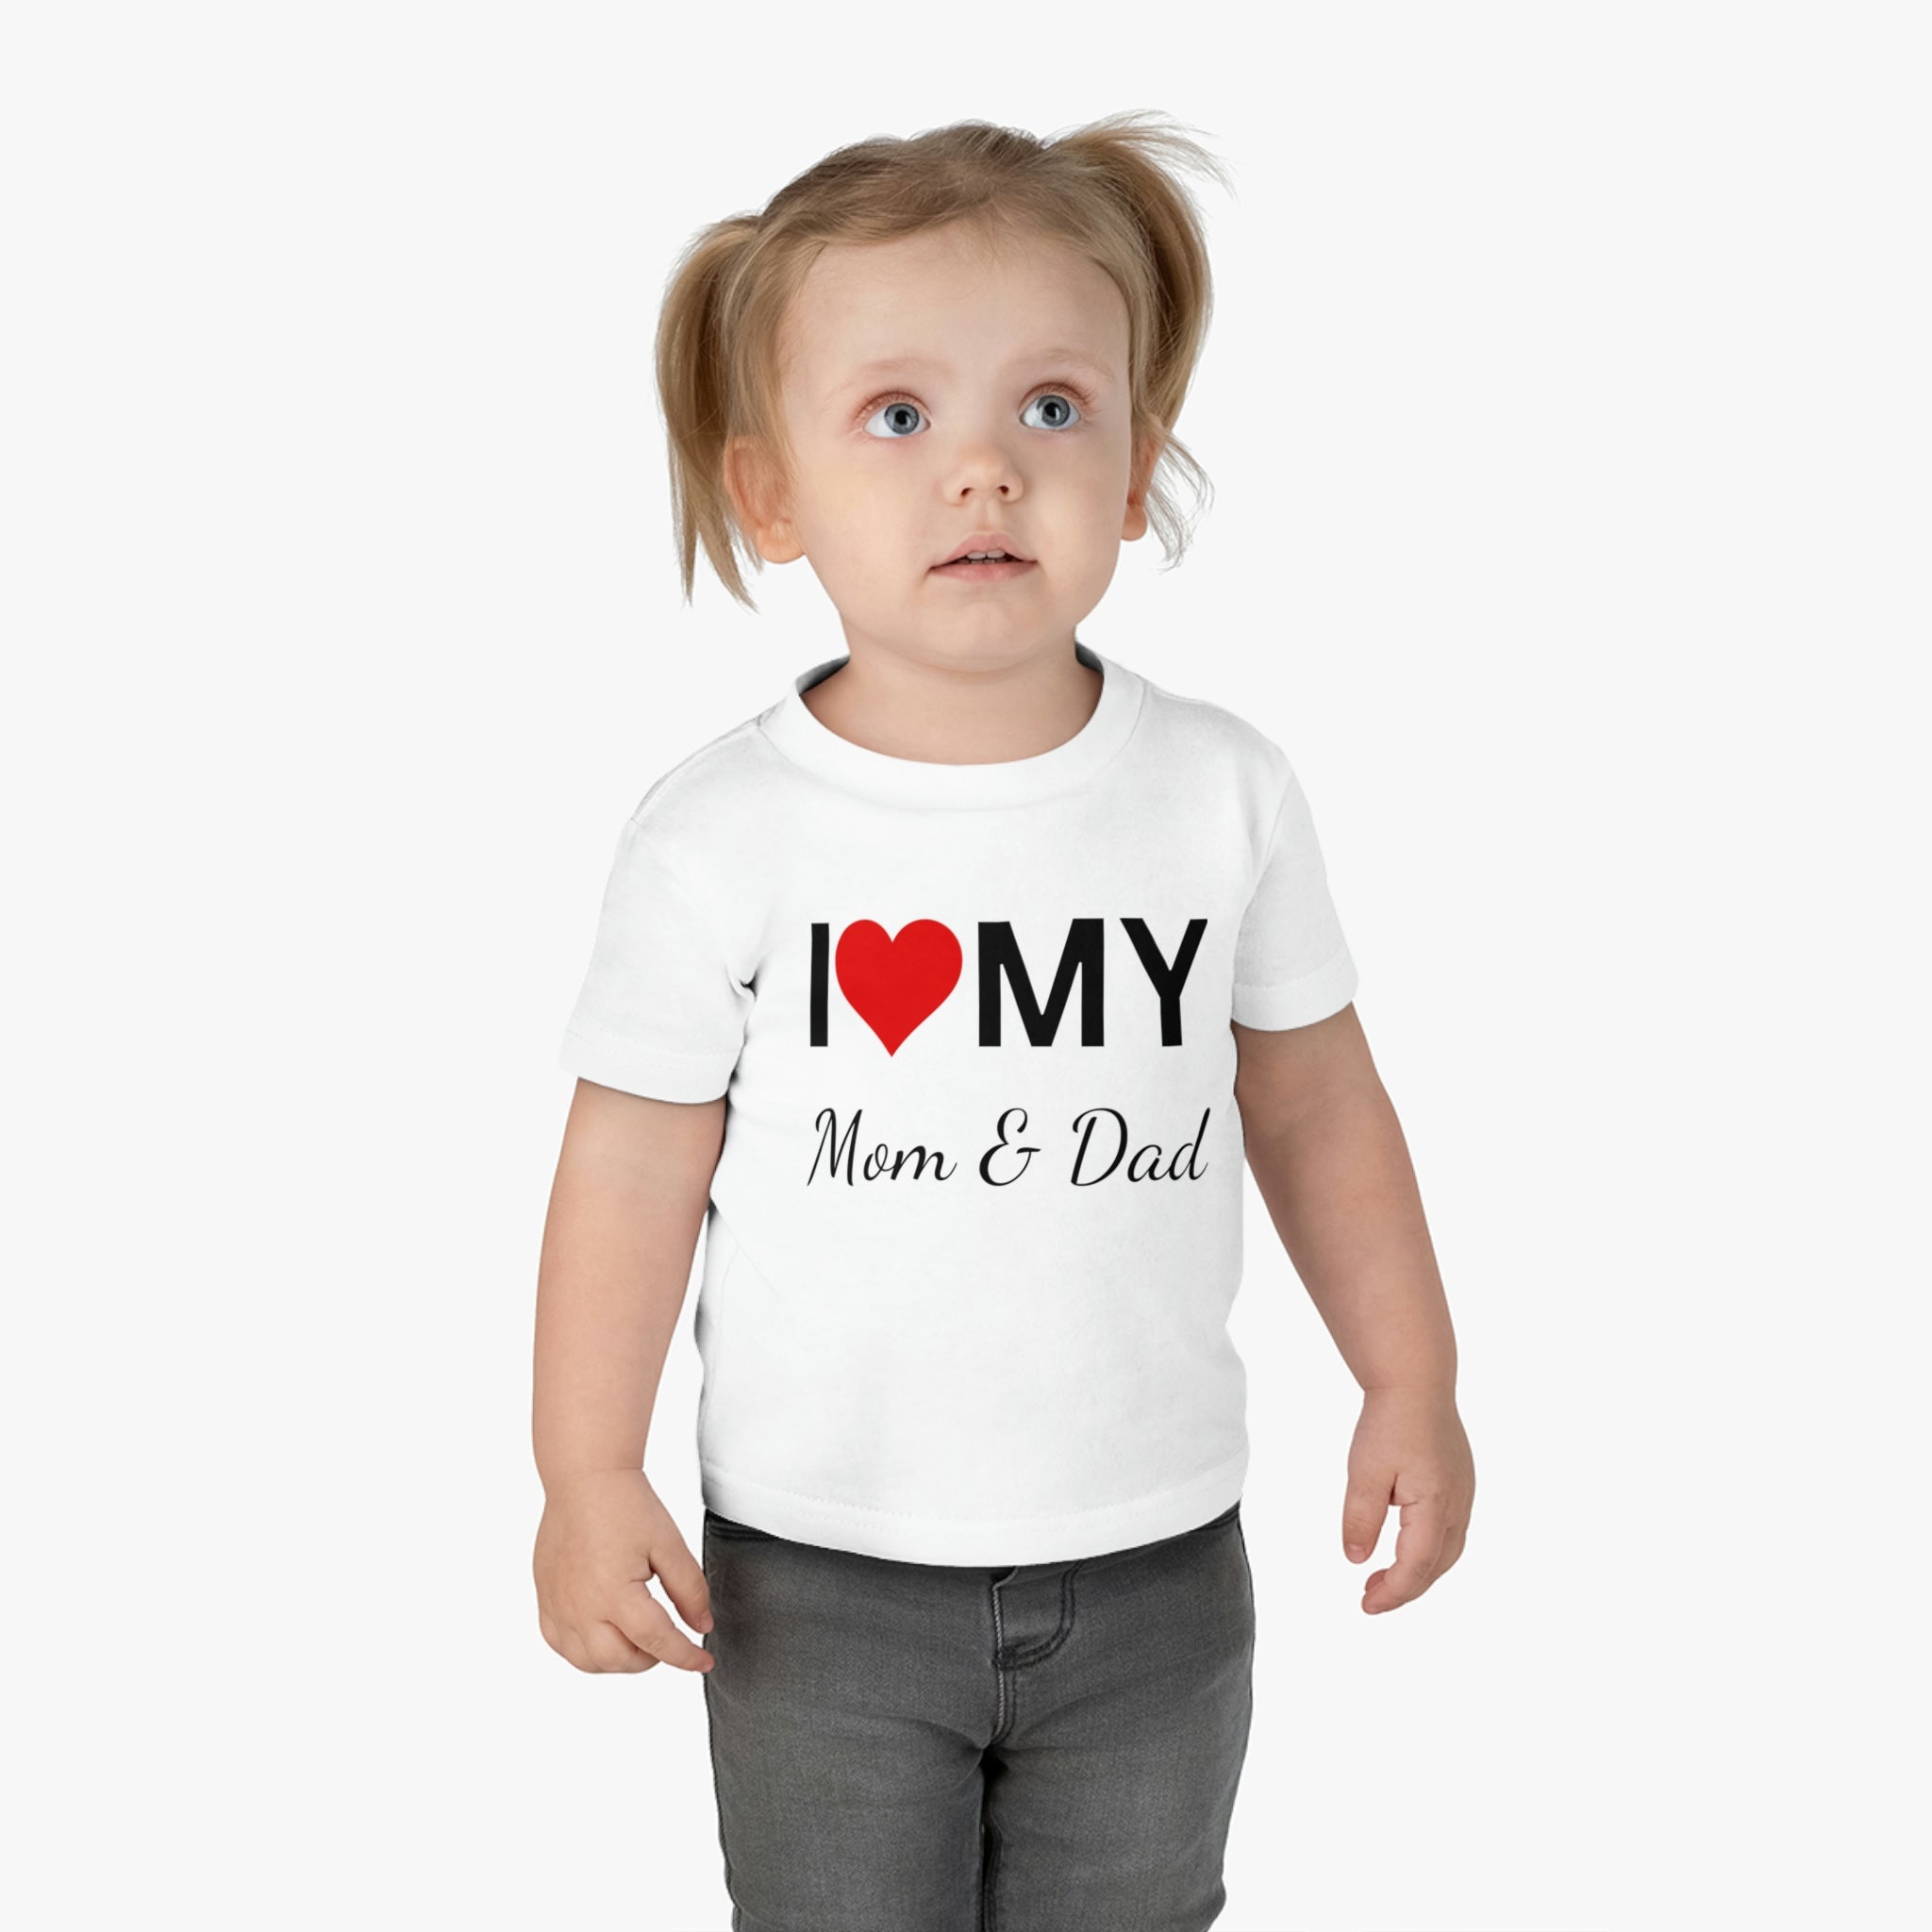 I Love Mom & Dad Infant Shirt, Baby Tee, Infant Tee